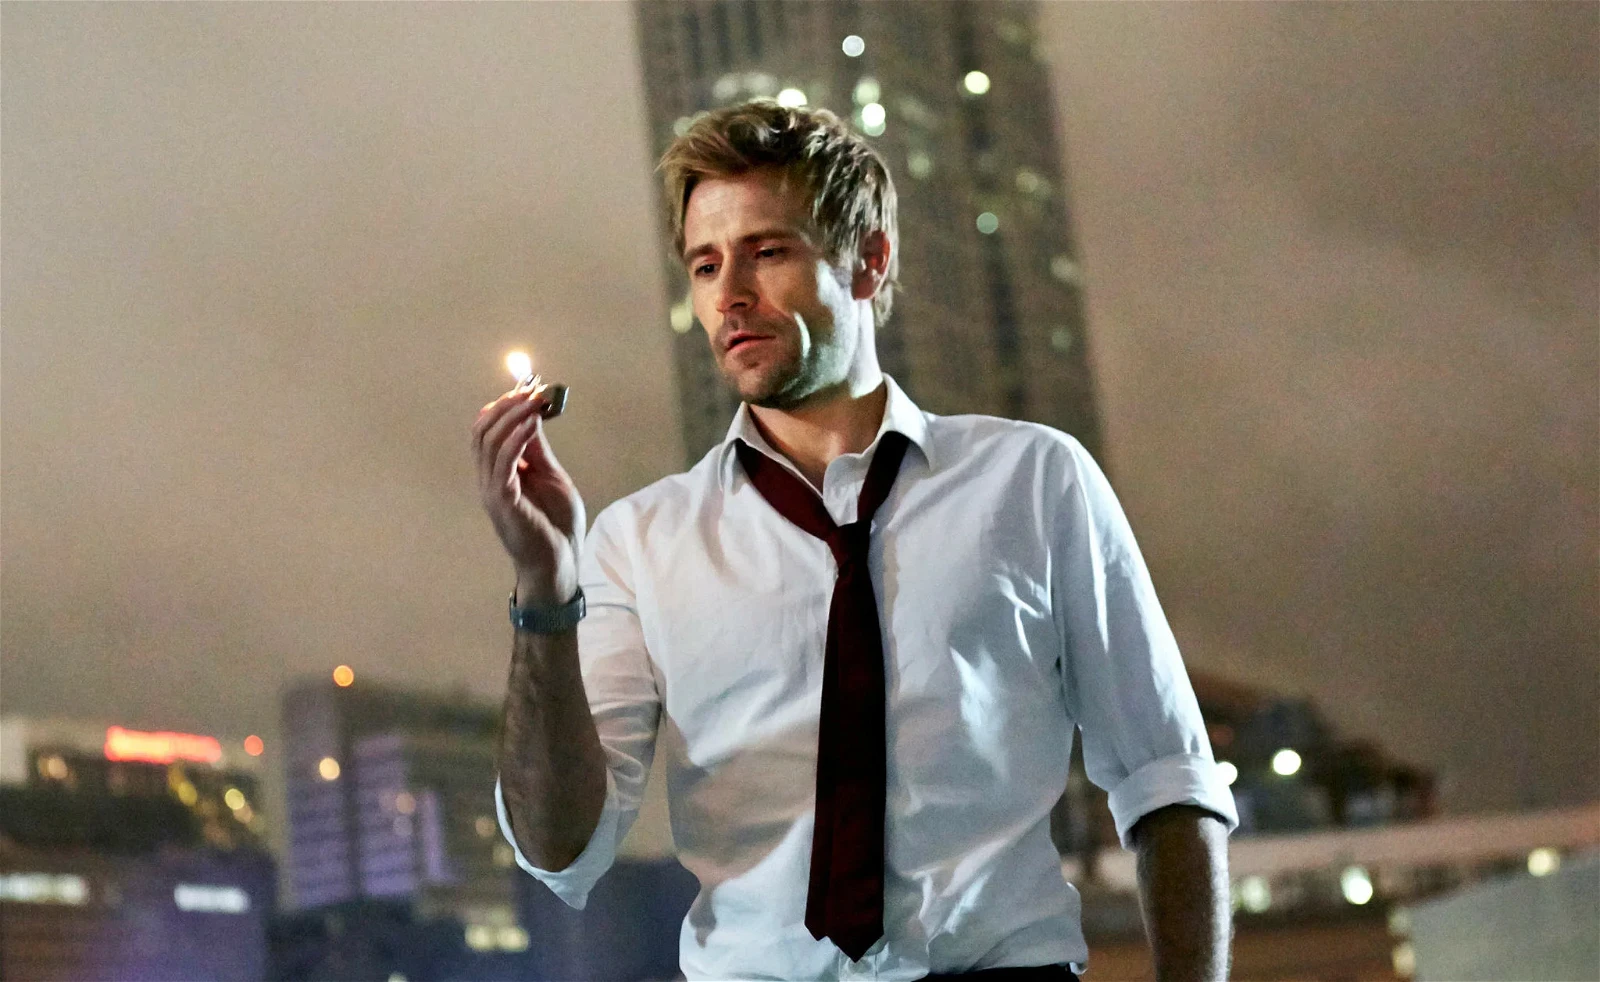 The original series Constantine (2014) featured Matt Ryan at the lead role.